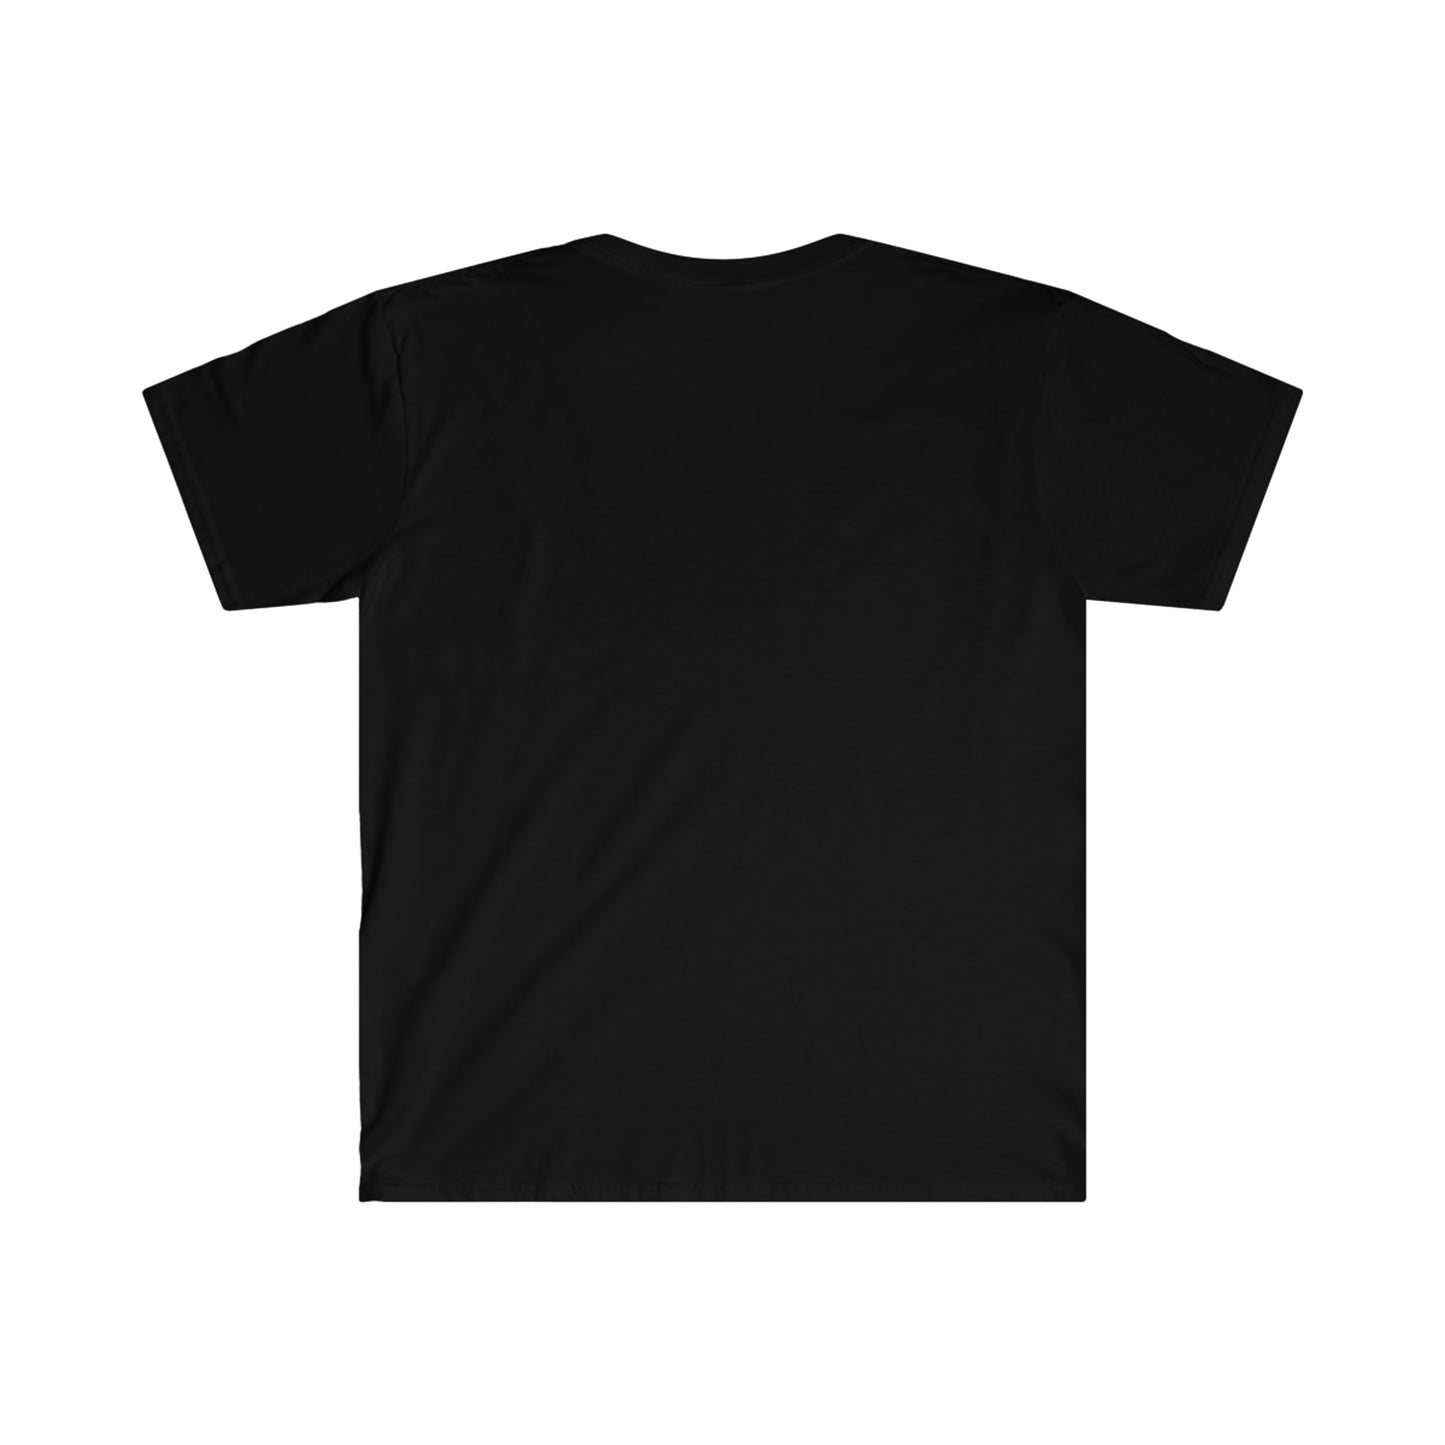 MUS Exclusive Design Heart 7.78 Men's Cotton T-Shirt Softstyle T-Shirt